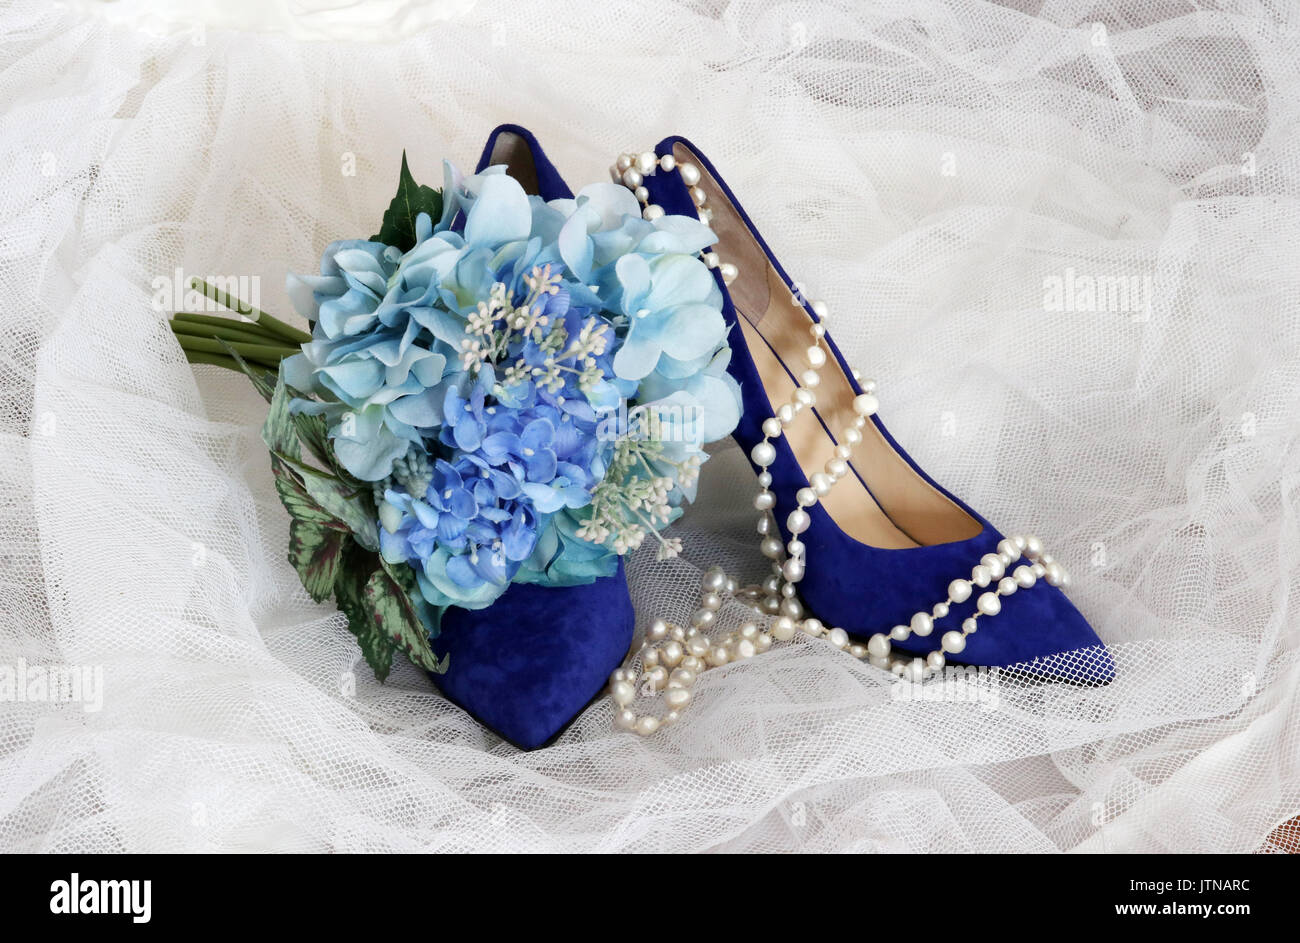 Nero lucido scarpe matrimonio Foto stock - Alamy